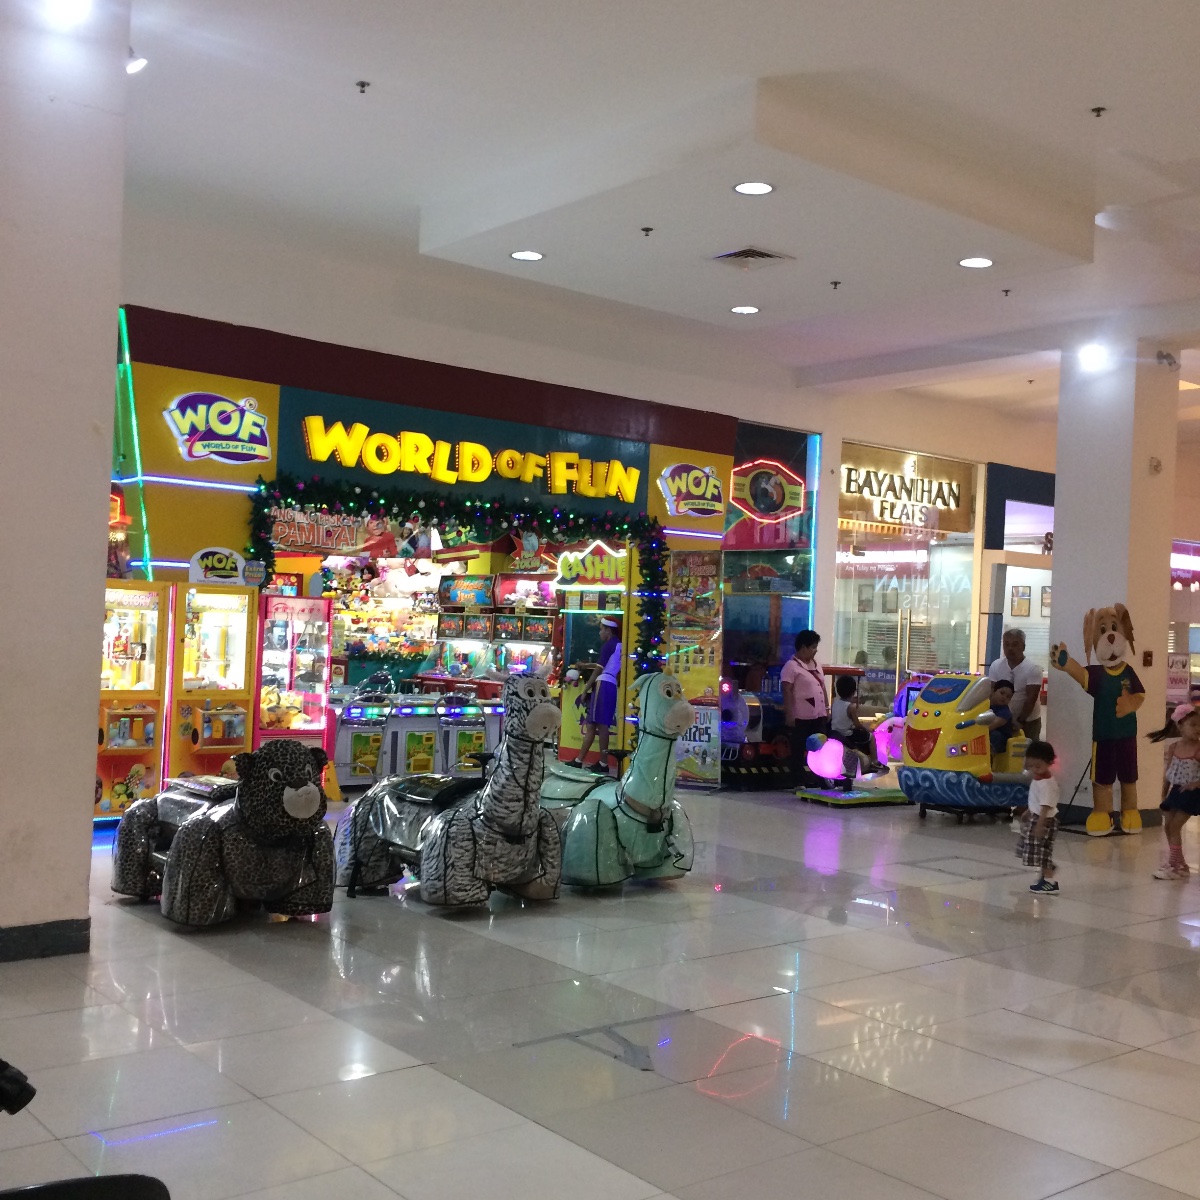 World of fun, arcade games